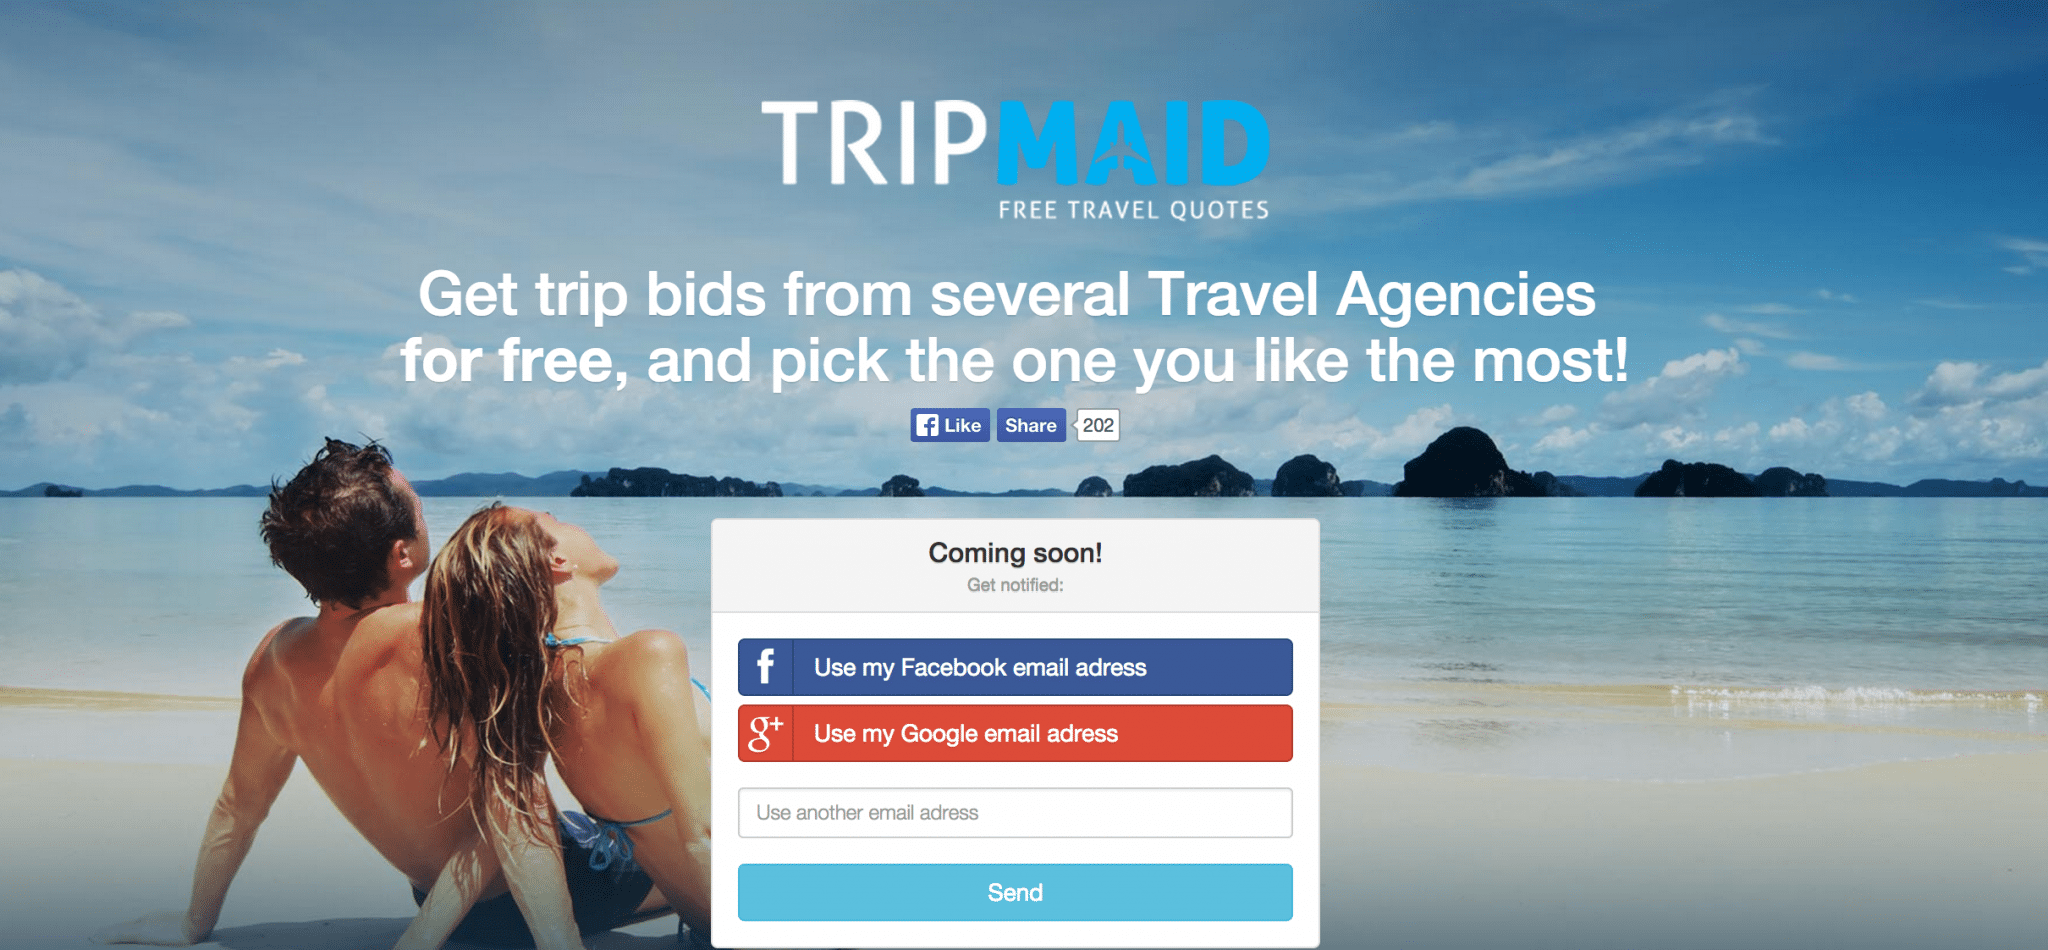 TripMaid lets you pick the trip bid you like the most.